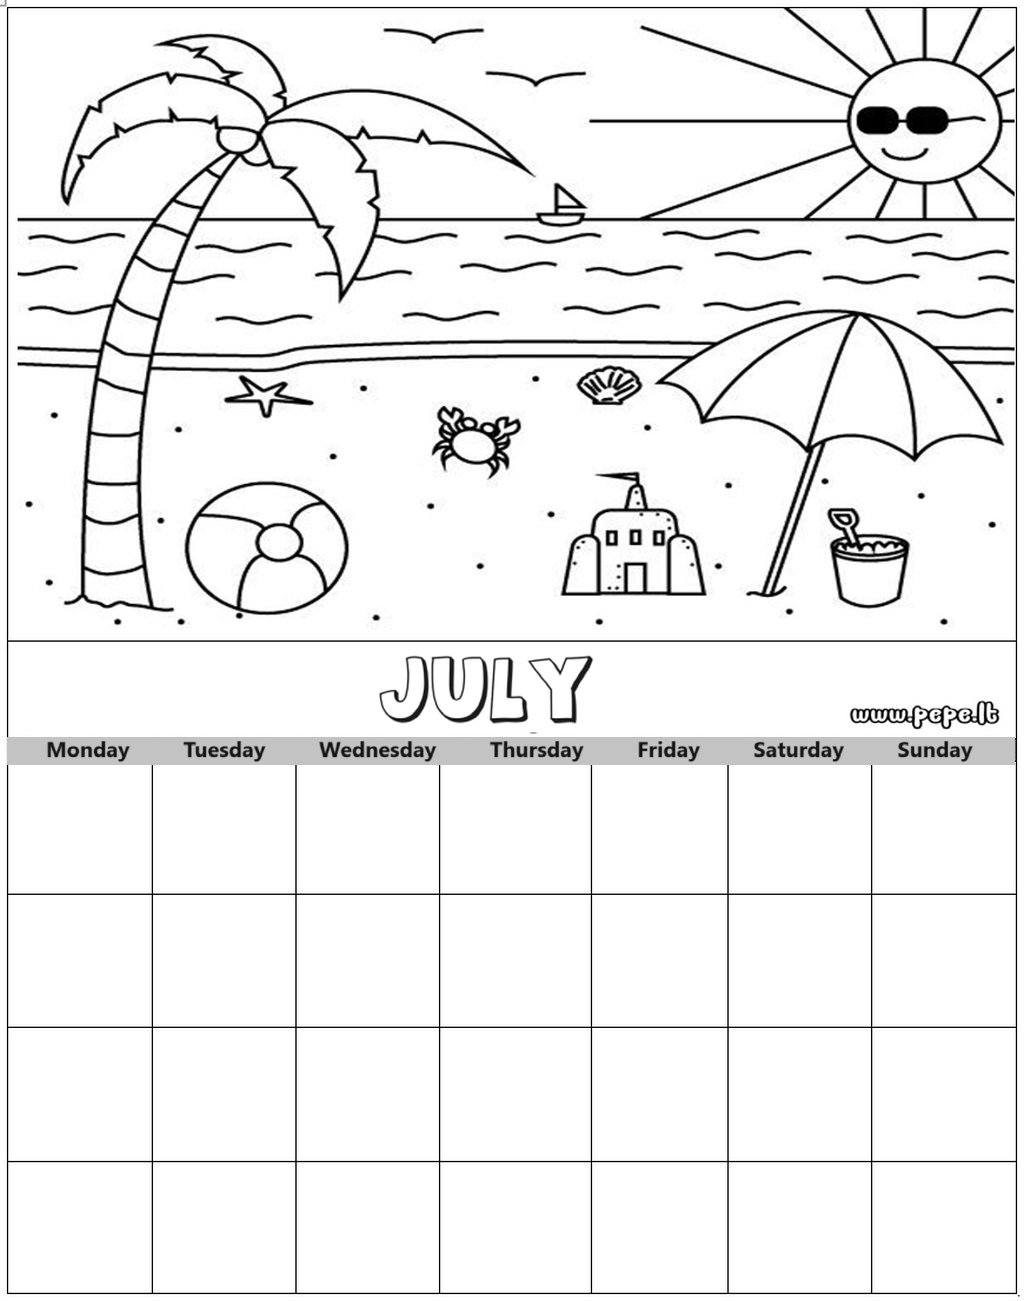 July calendar coloring